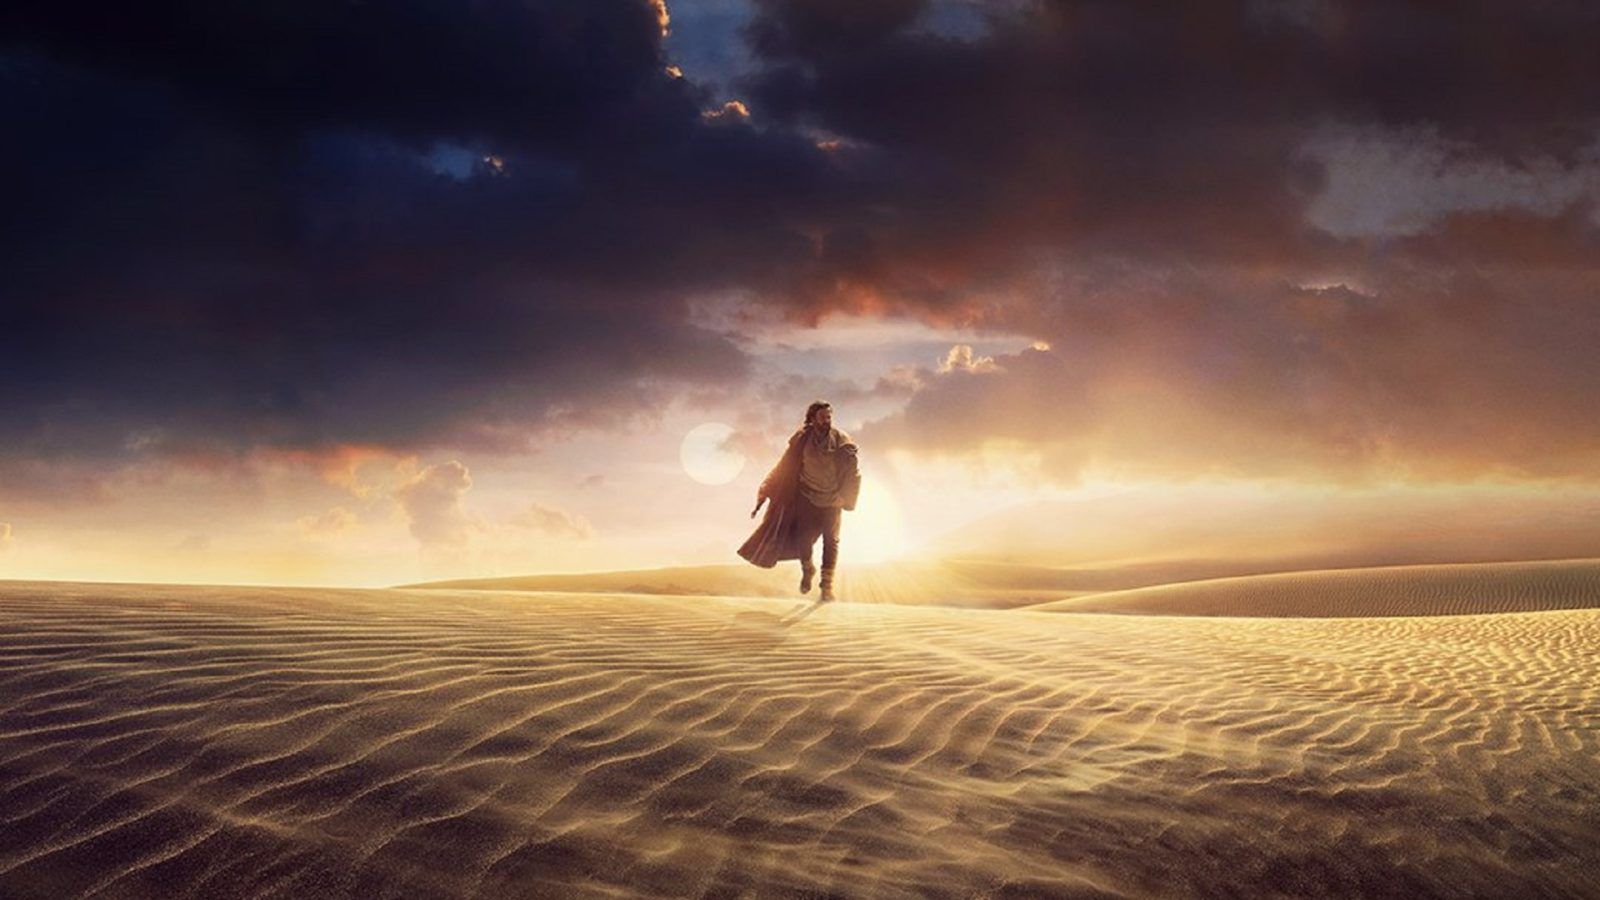 ‘Obi-Wan Kenobi’ poster out, Disney+ series to premiere on May 25